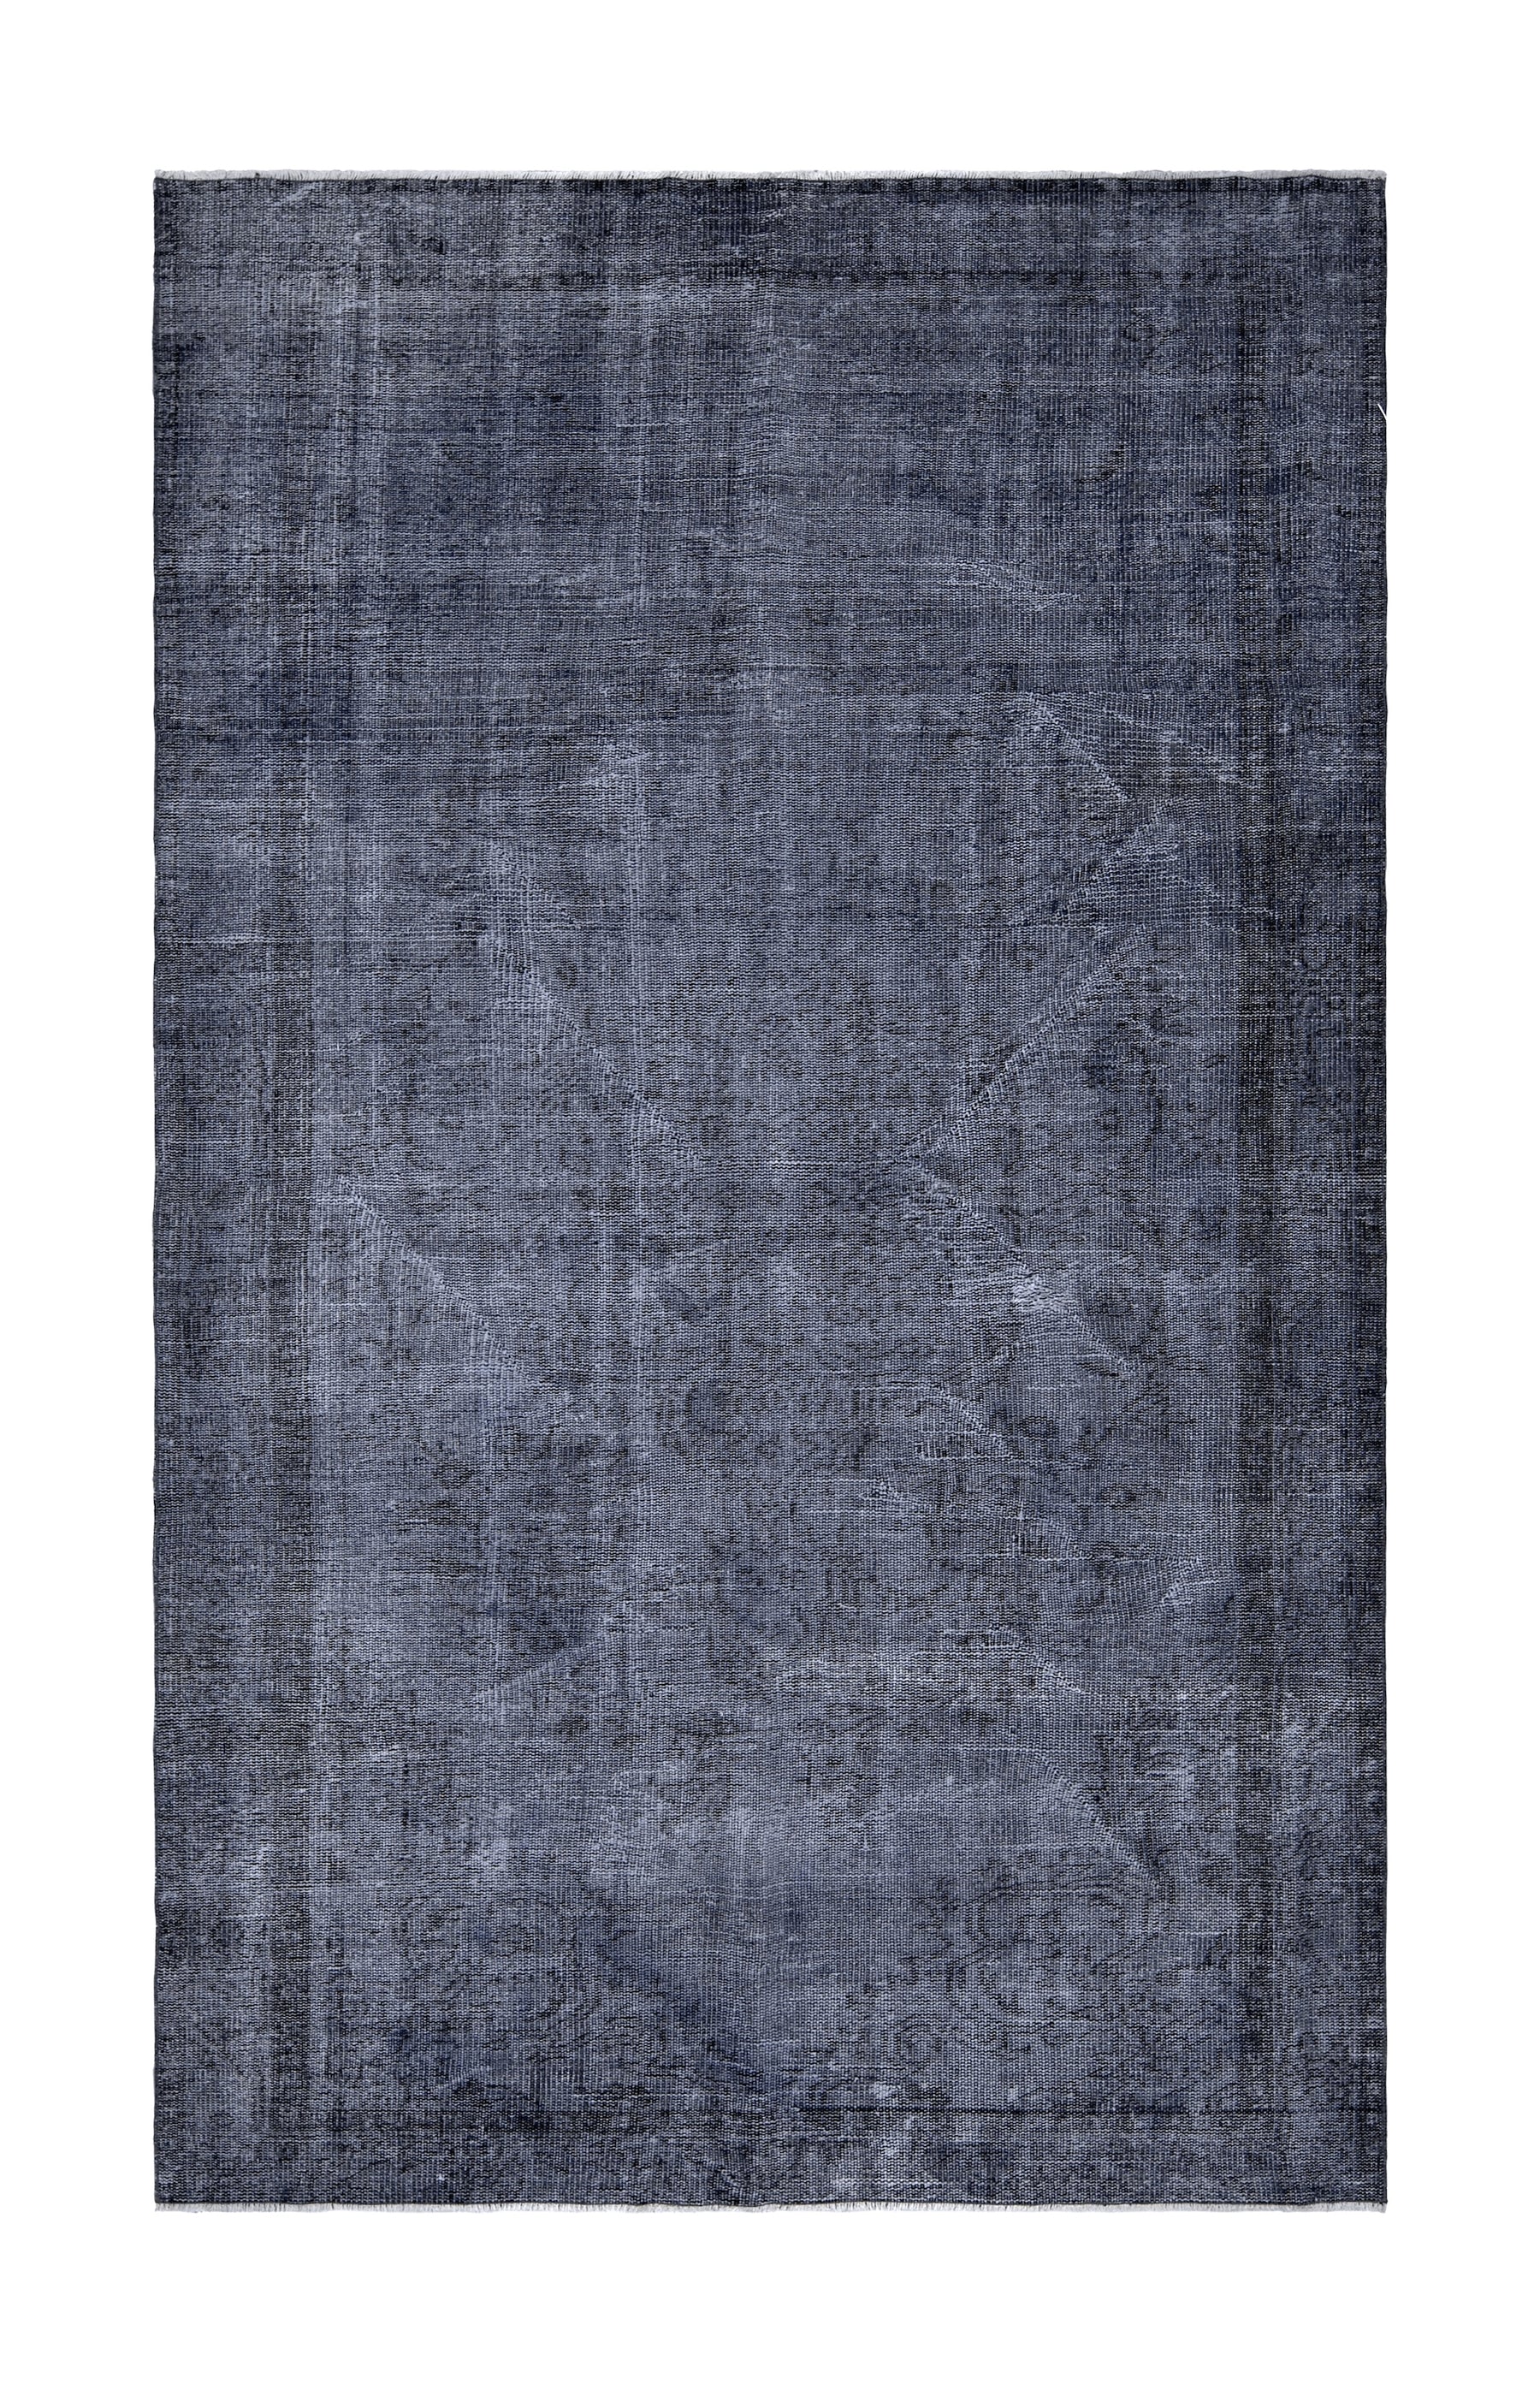 Kendaline - Vintage Gray Overdyed Rug